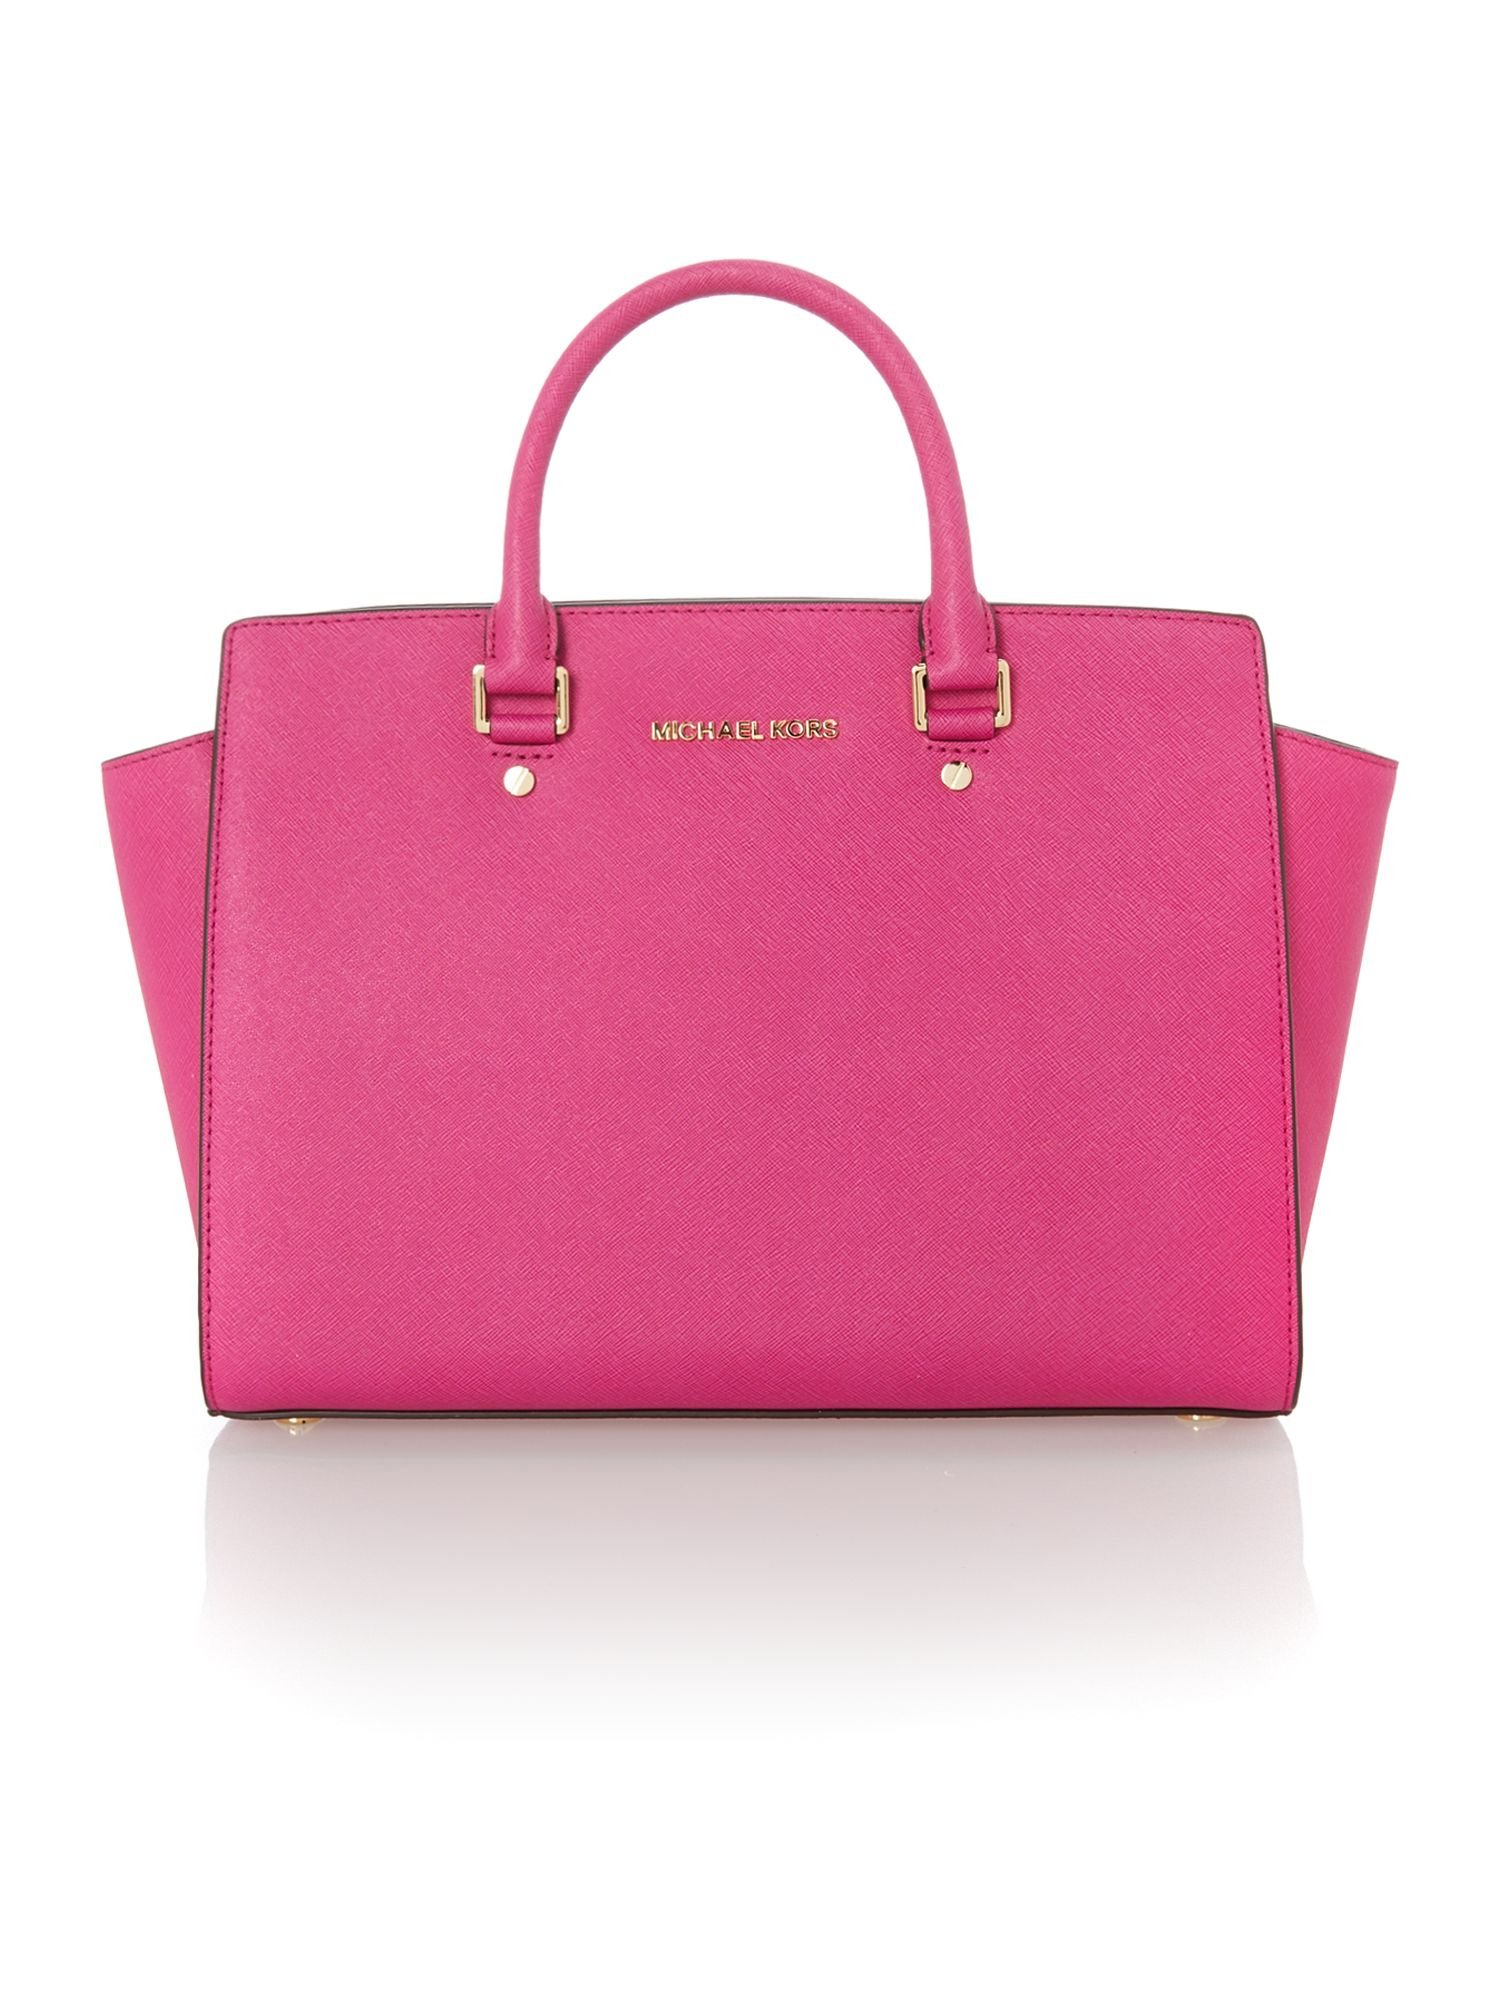 Michael Kors Selma Pink Tote Bag in Pink | Lyst